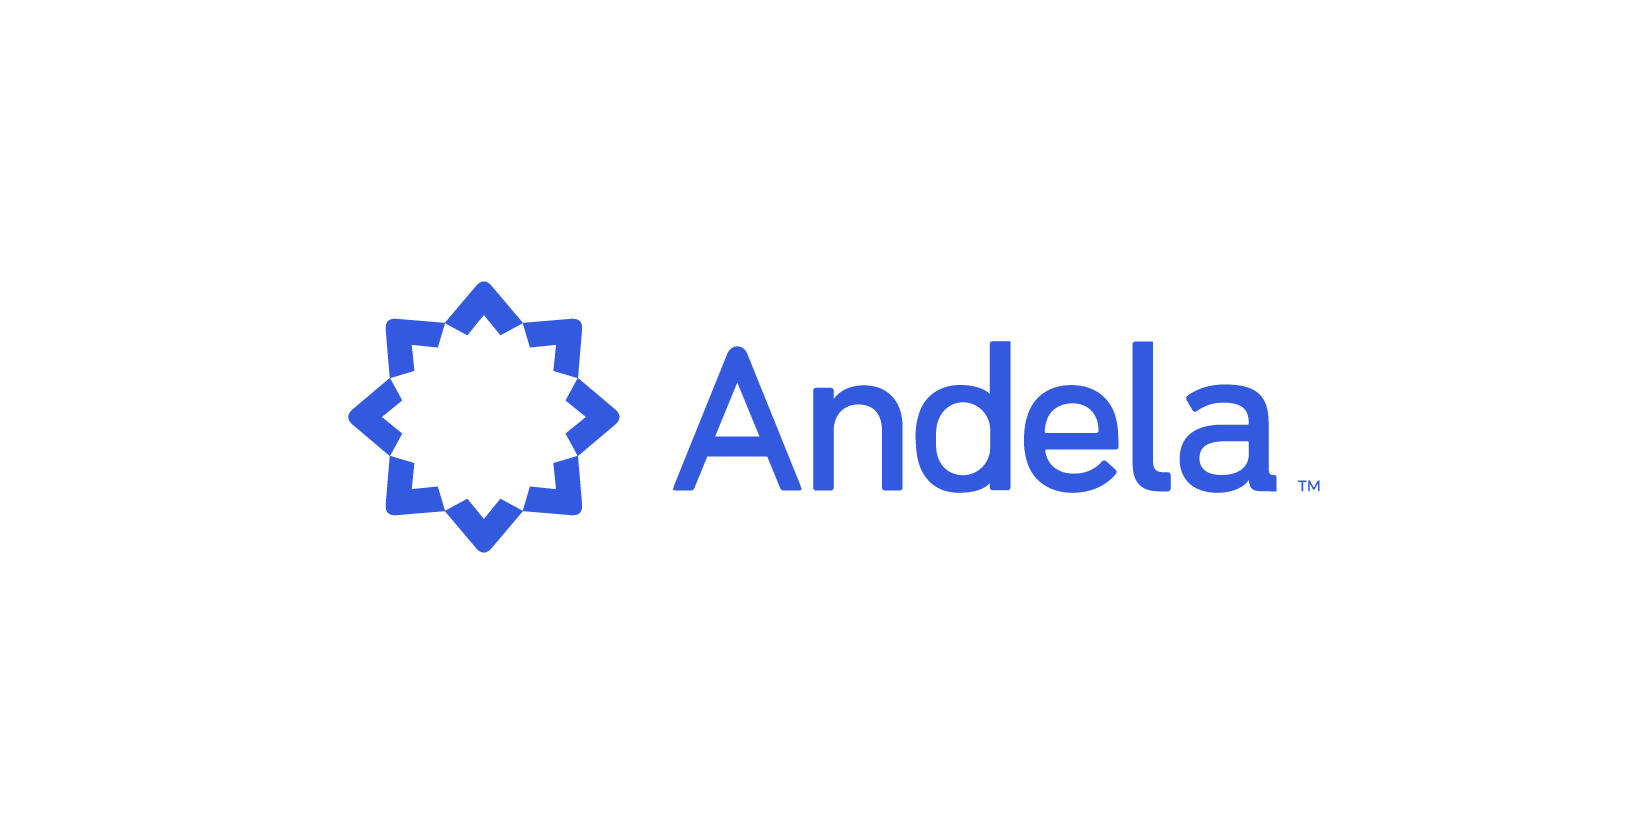 VisionFund Portfolio Company Andela's Logo